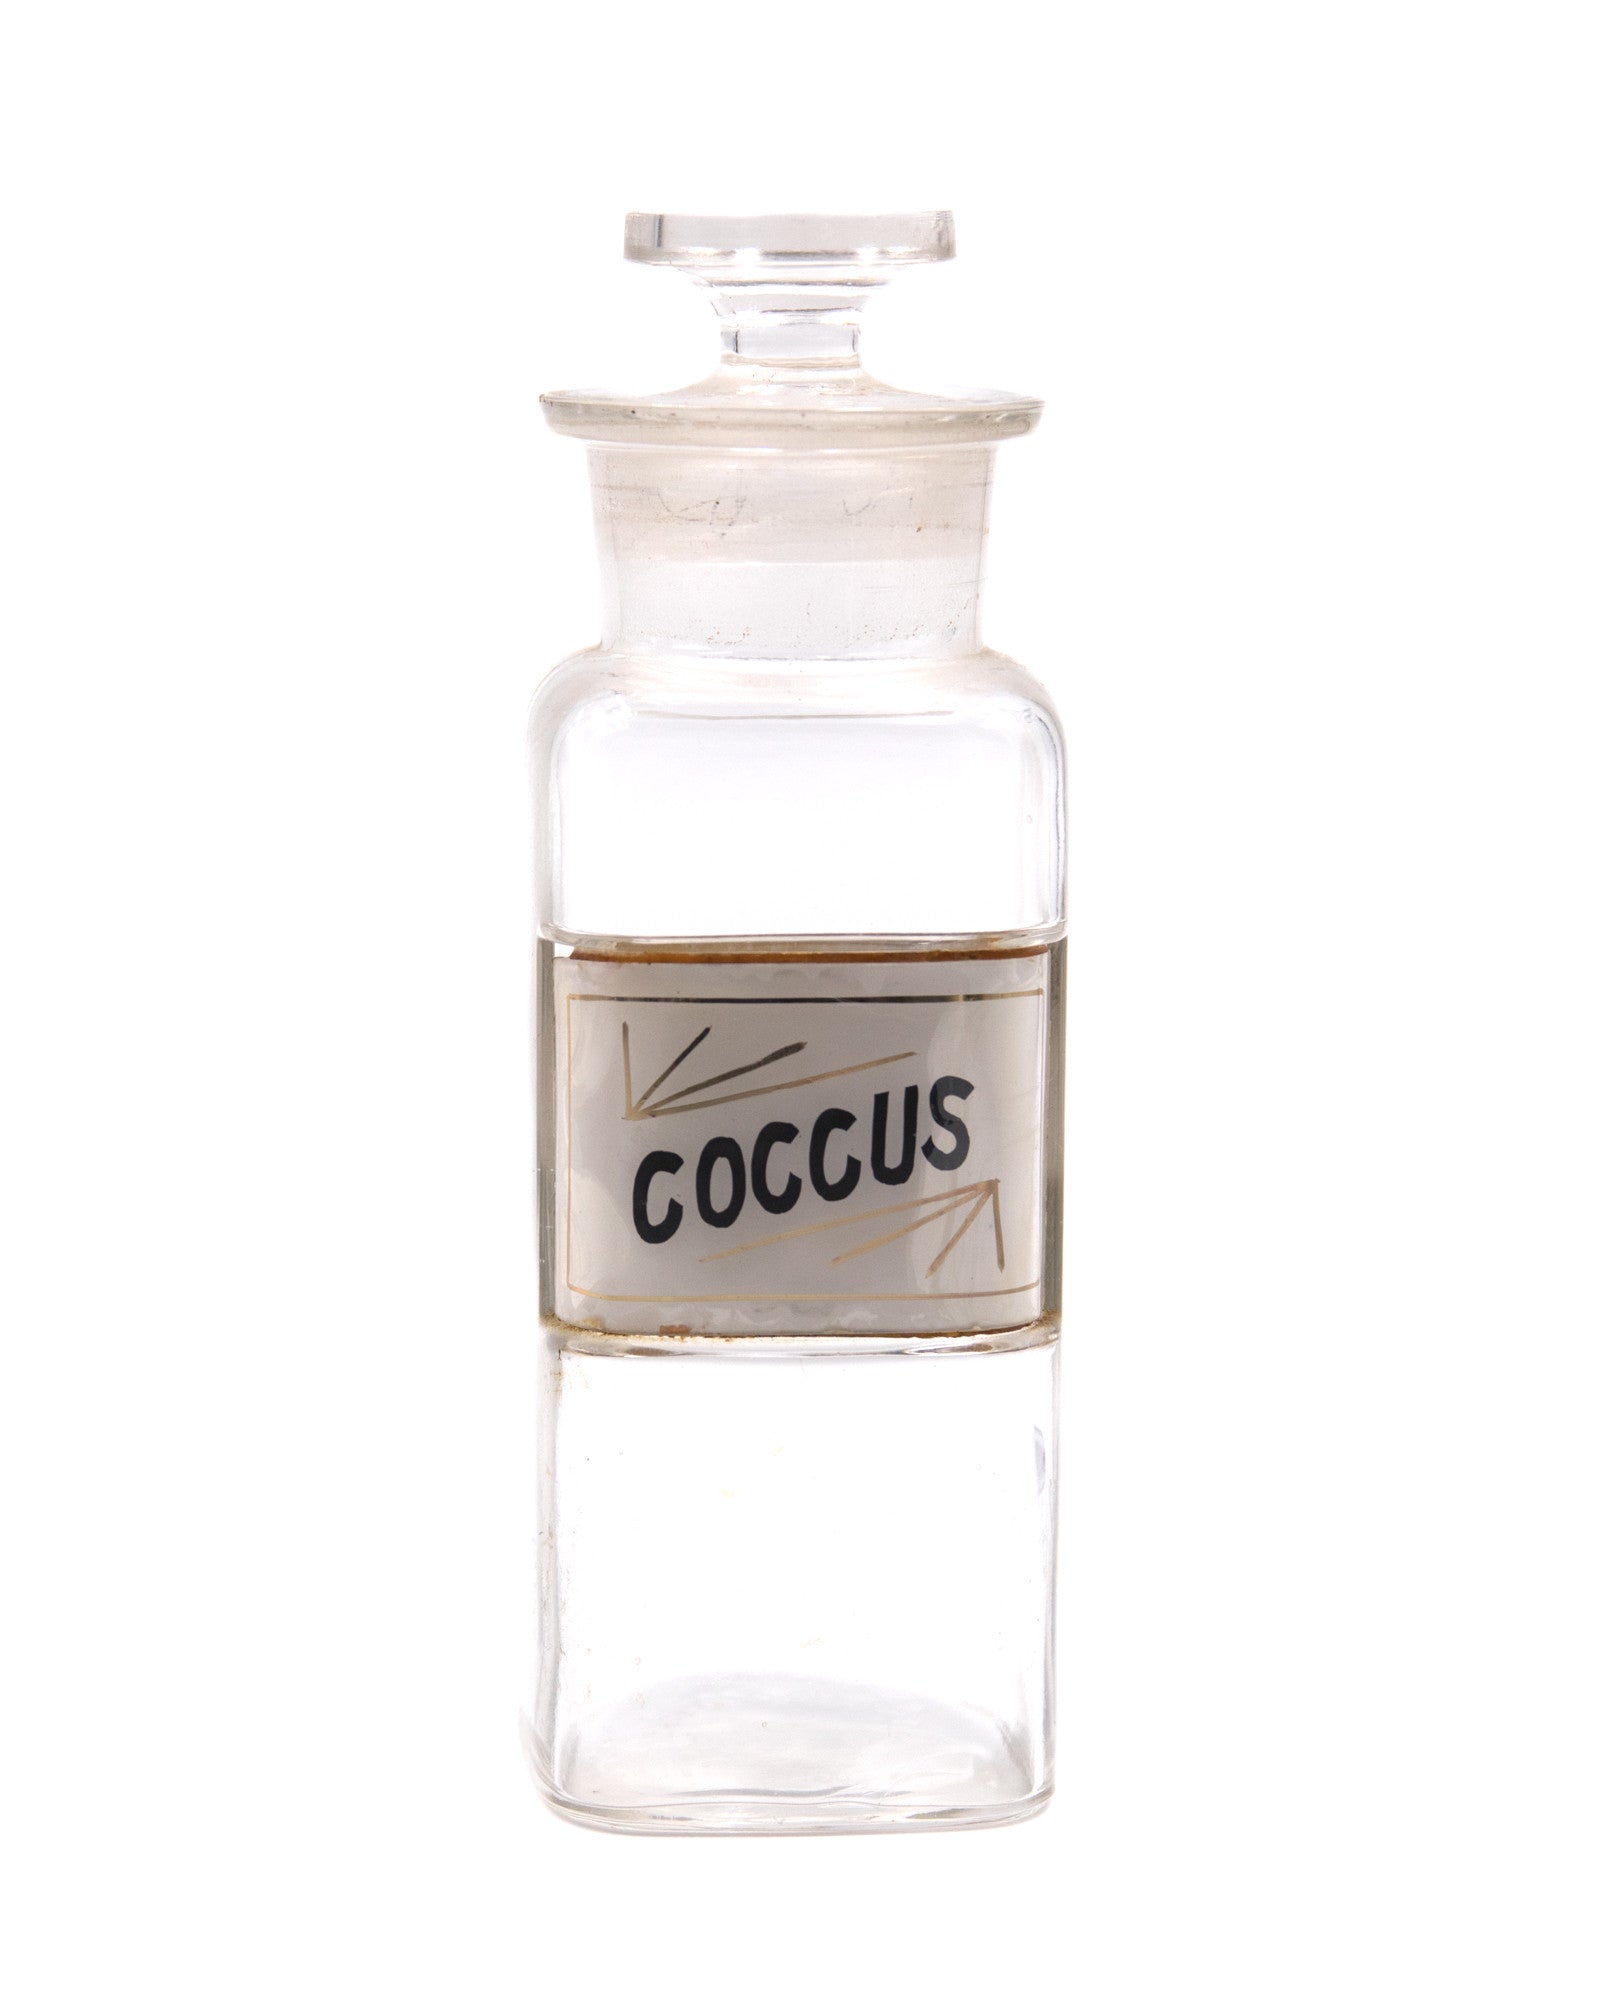 Apothecary Jar - Coccus